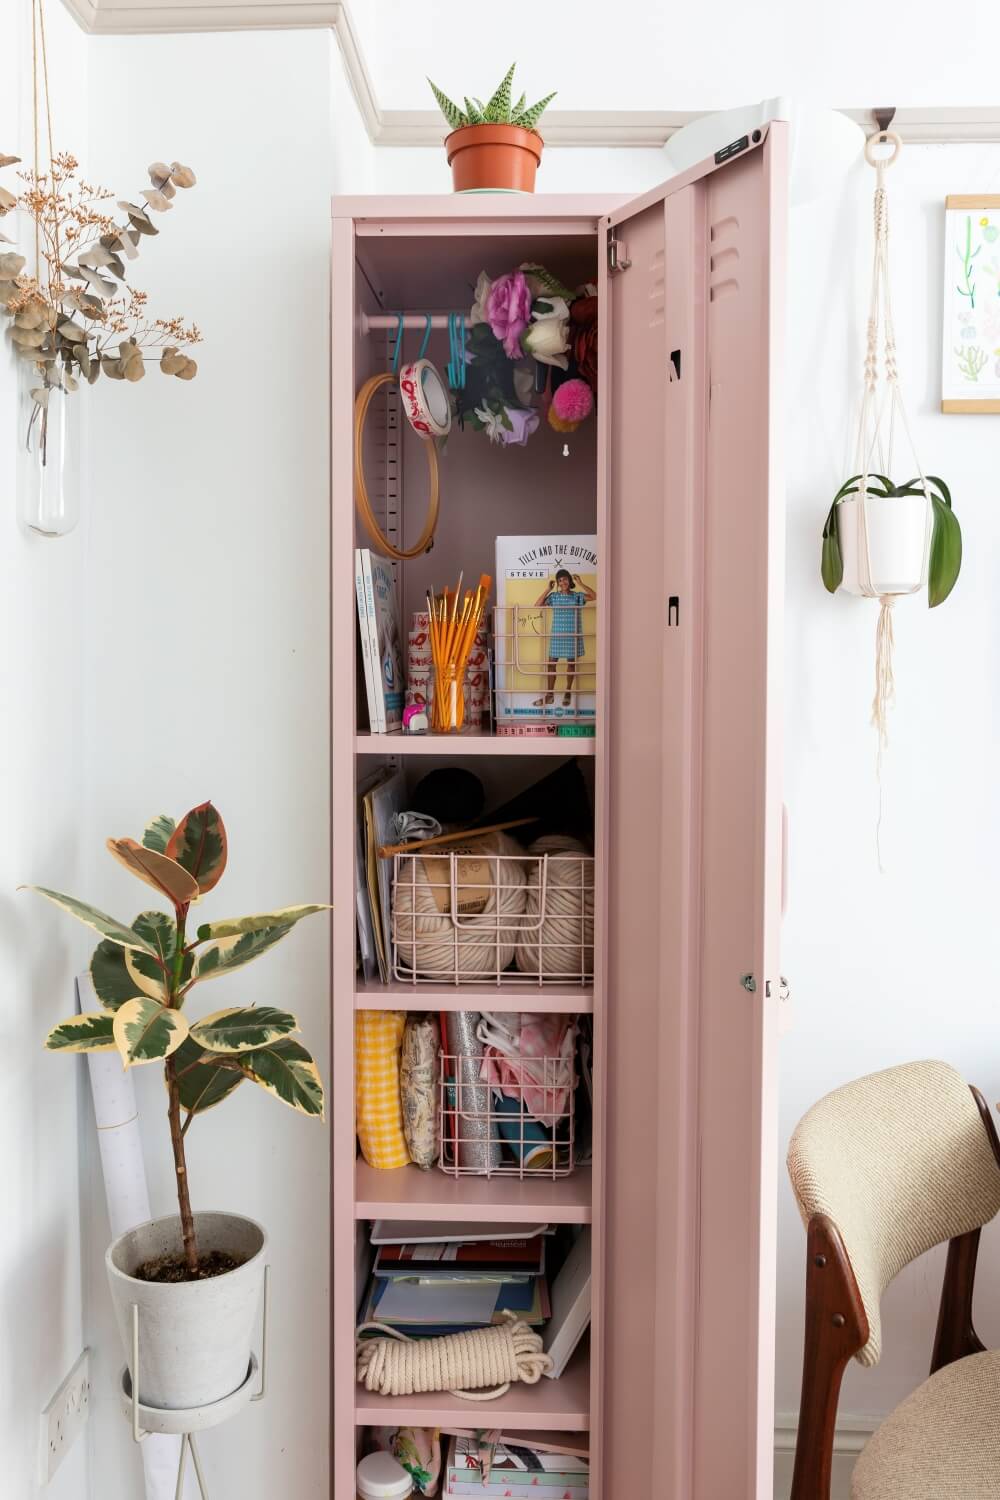 A look inside the pink mustard locker . Shelves of craft storage